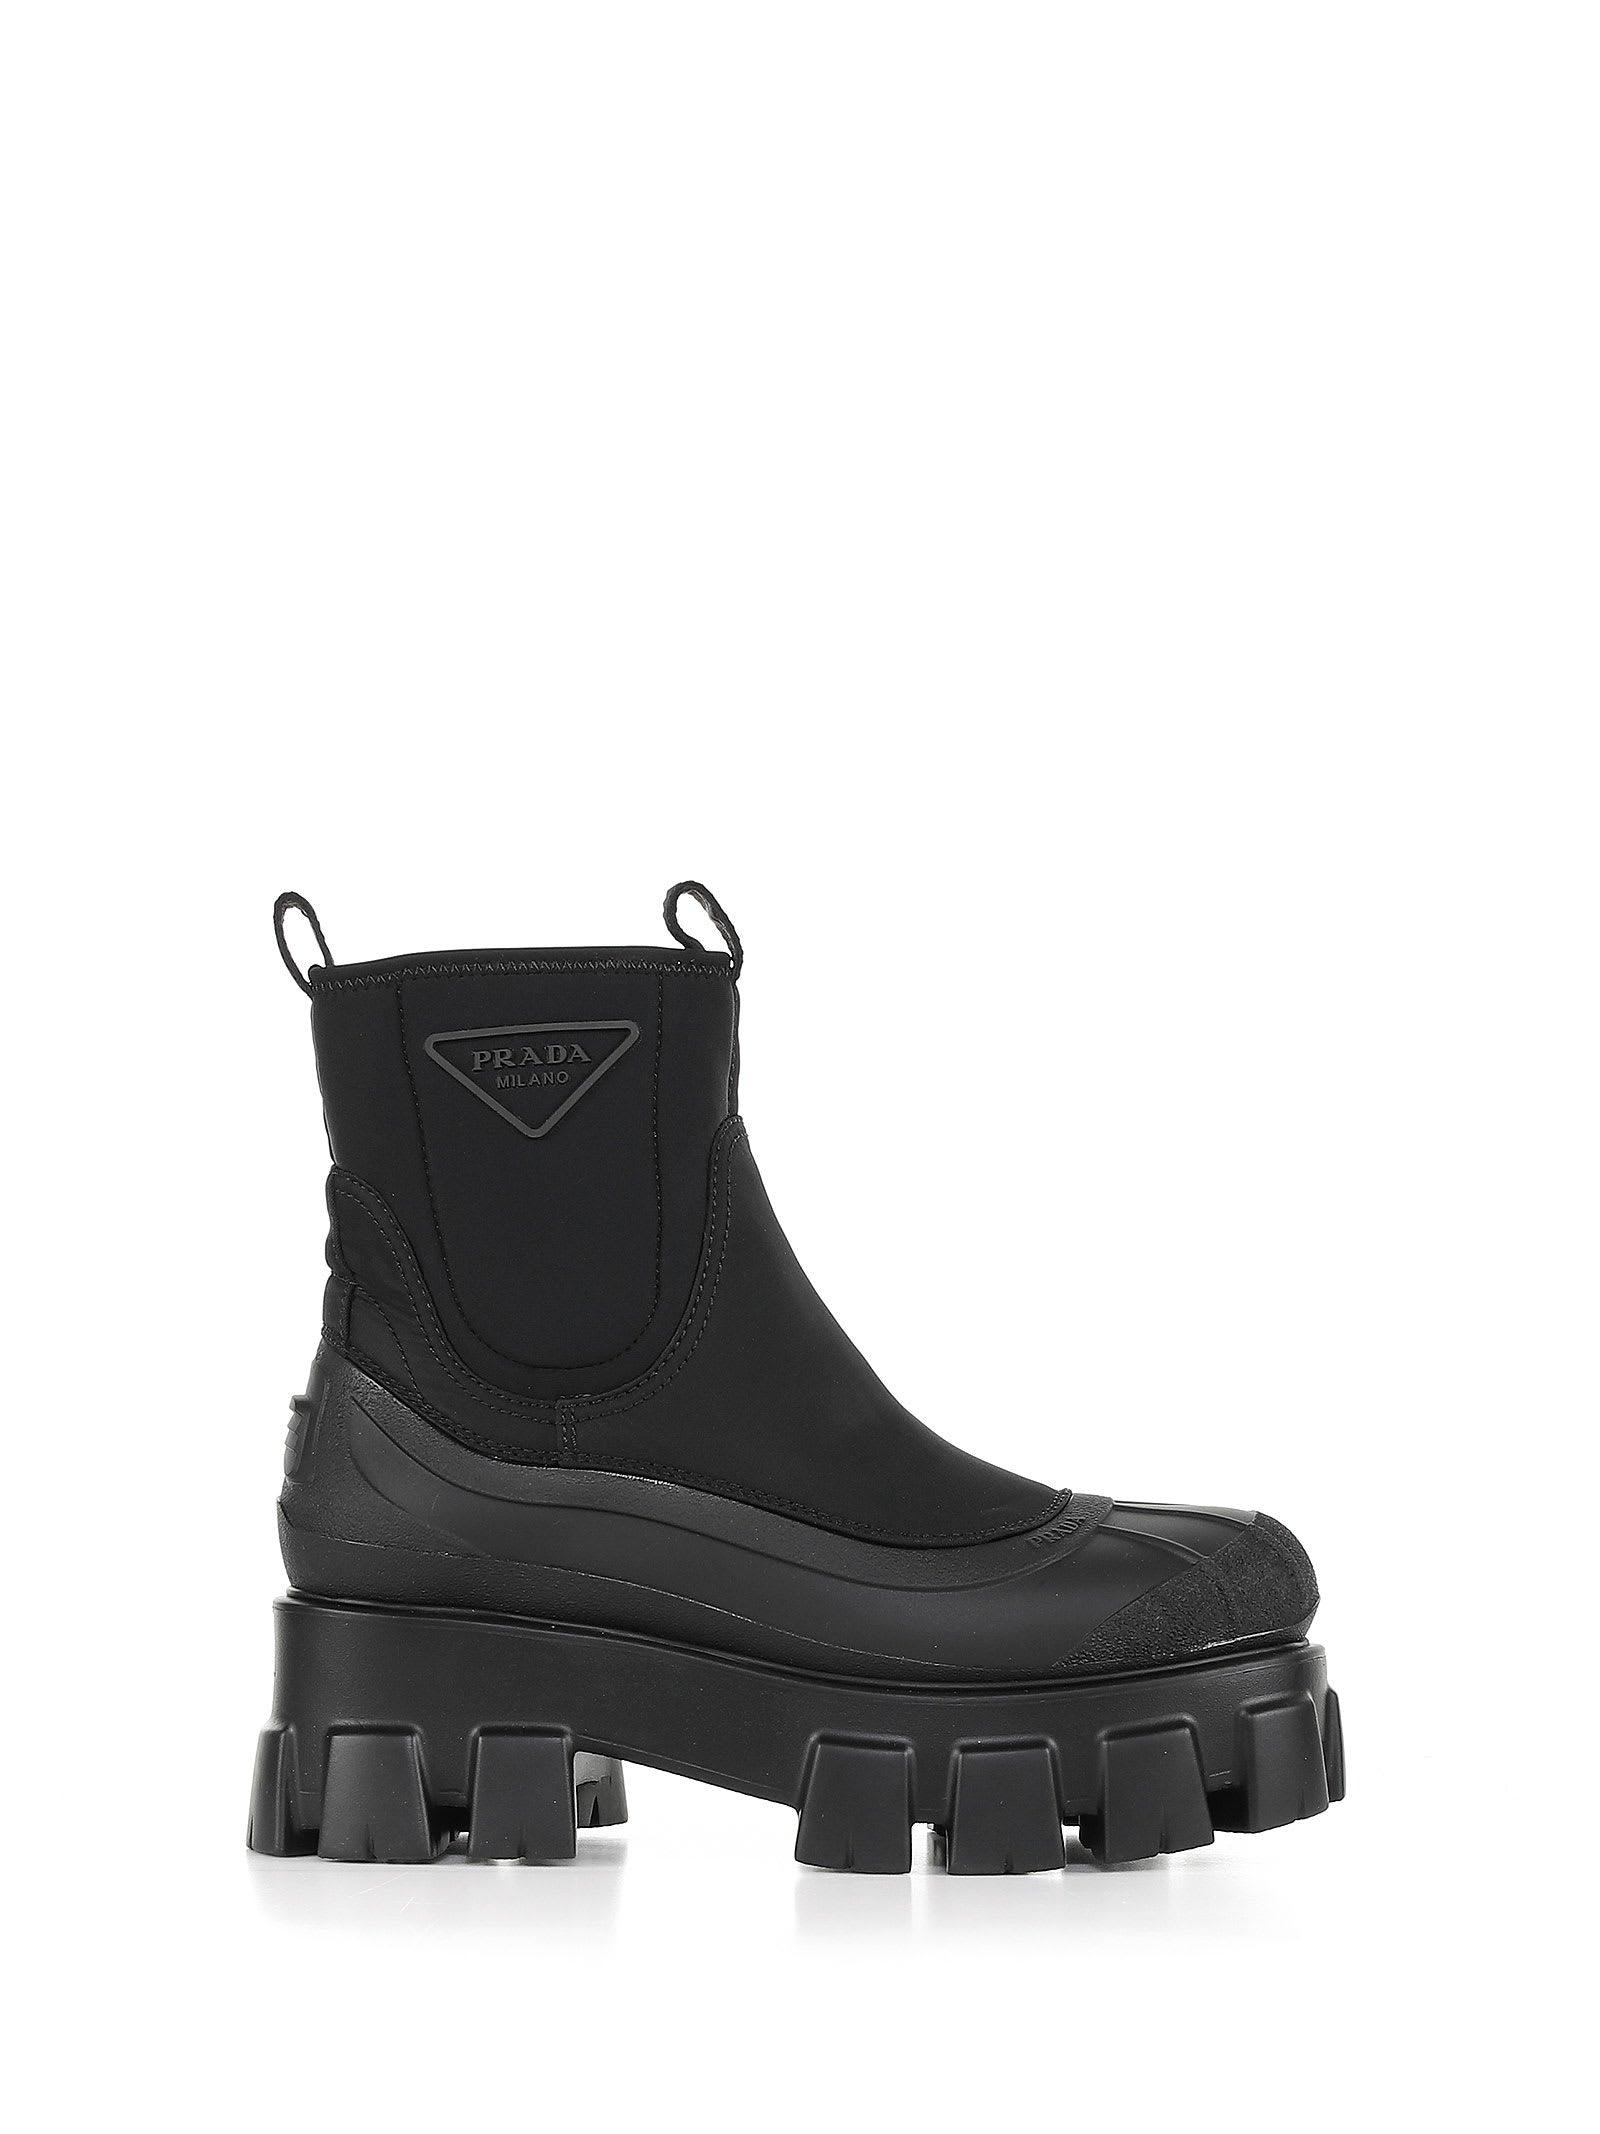 Prada Monolith Ankle Boot in Black | Lyst